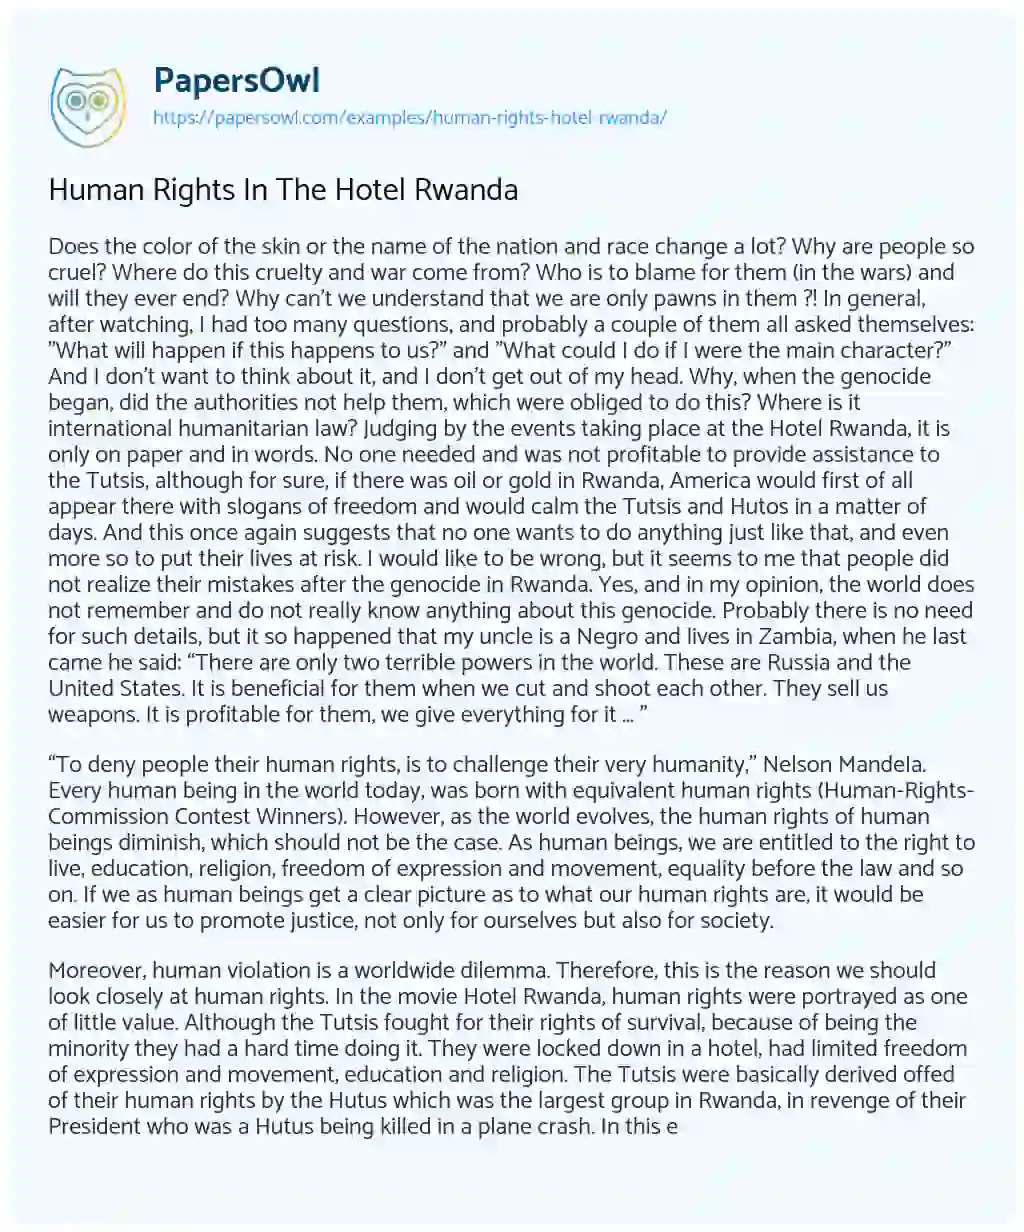 Essay on Human Rights in the Hotel Rwanda